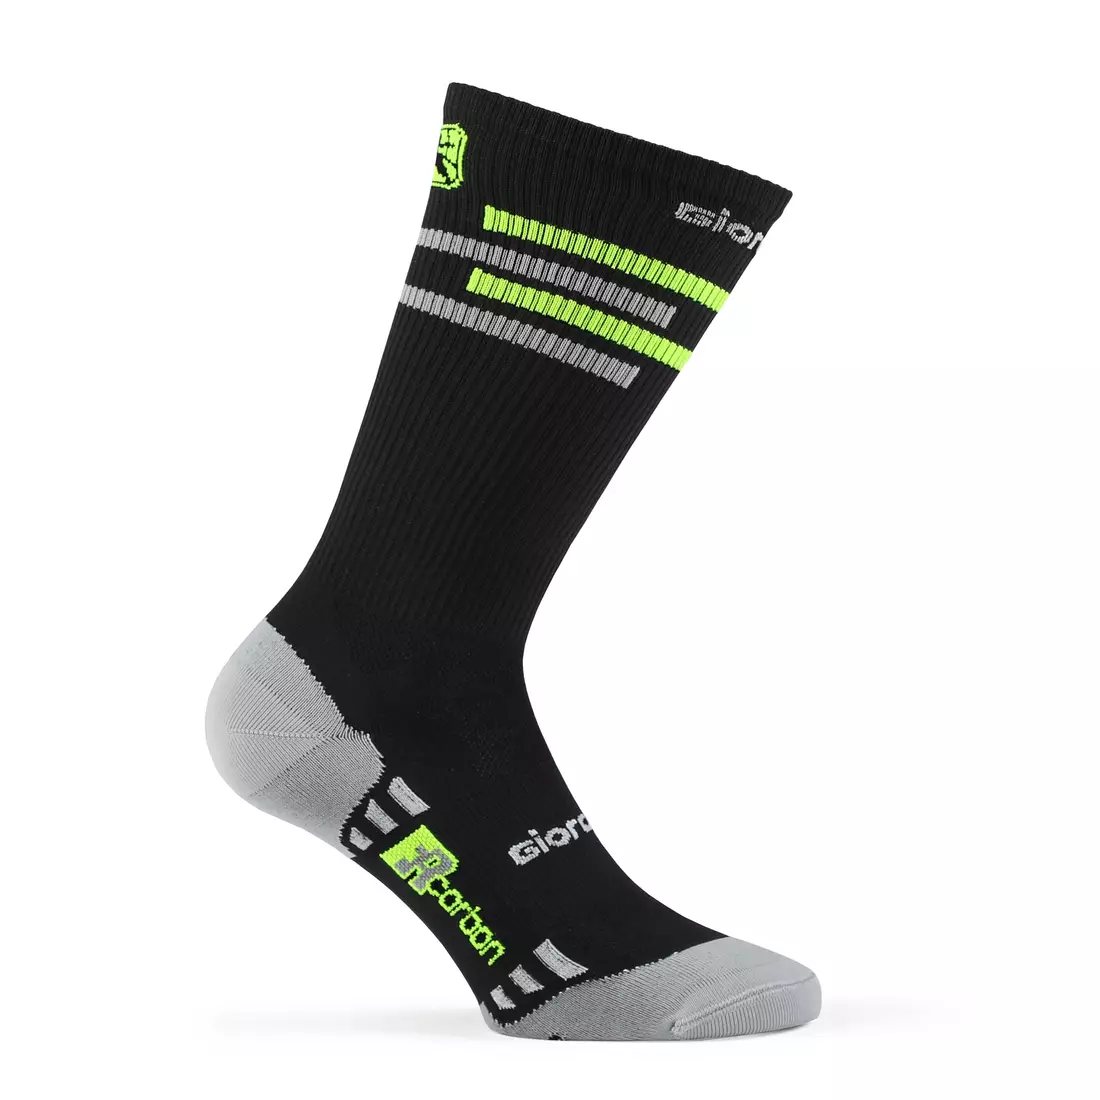 GIORDANA LINES black and fluorine cycling socks